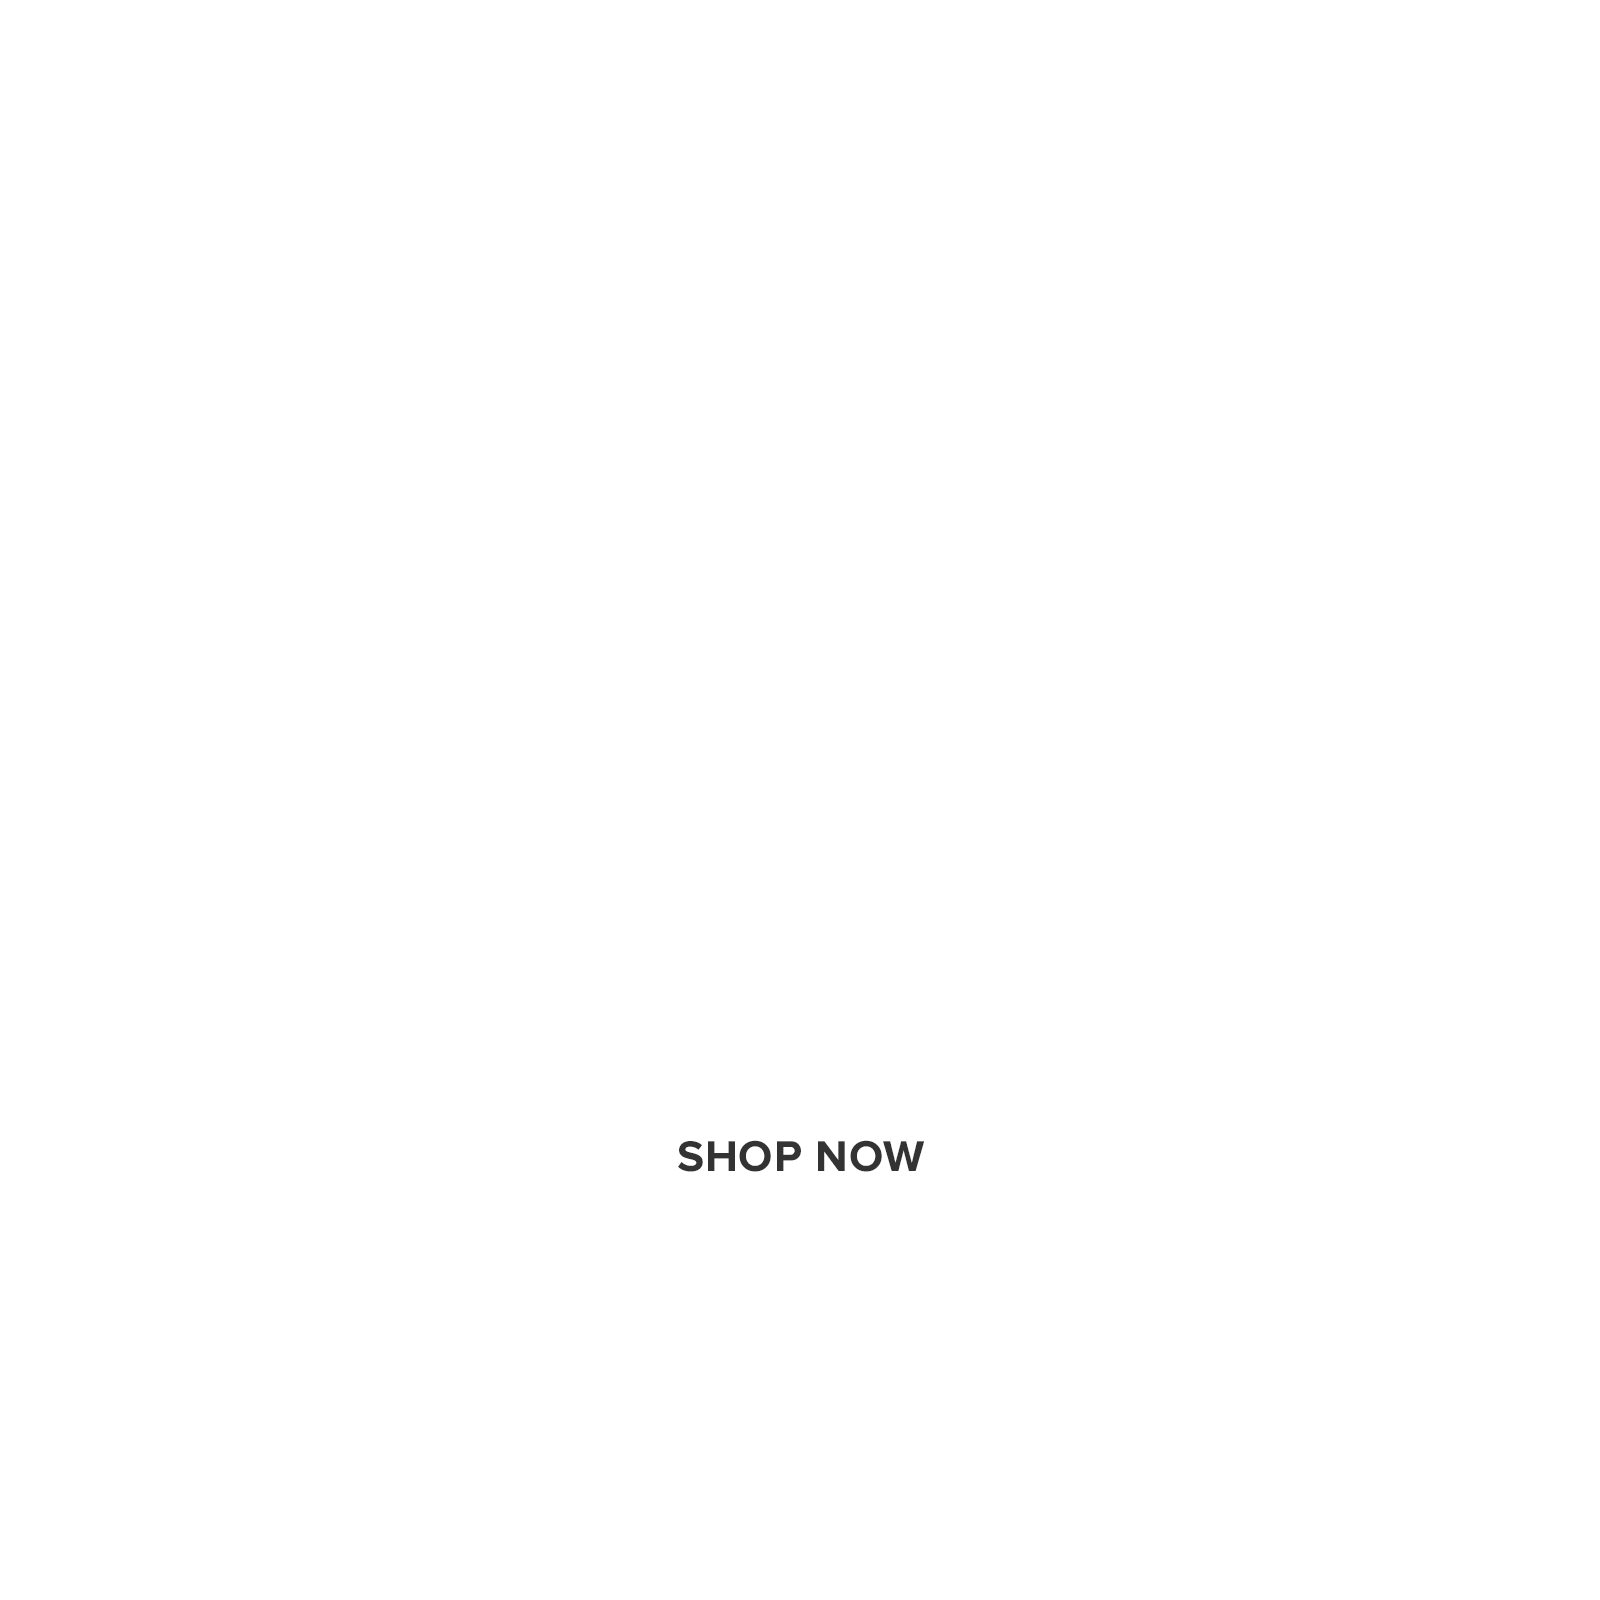 25% off yoga with code dotdyoga